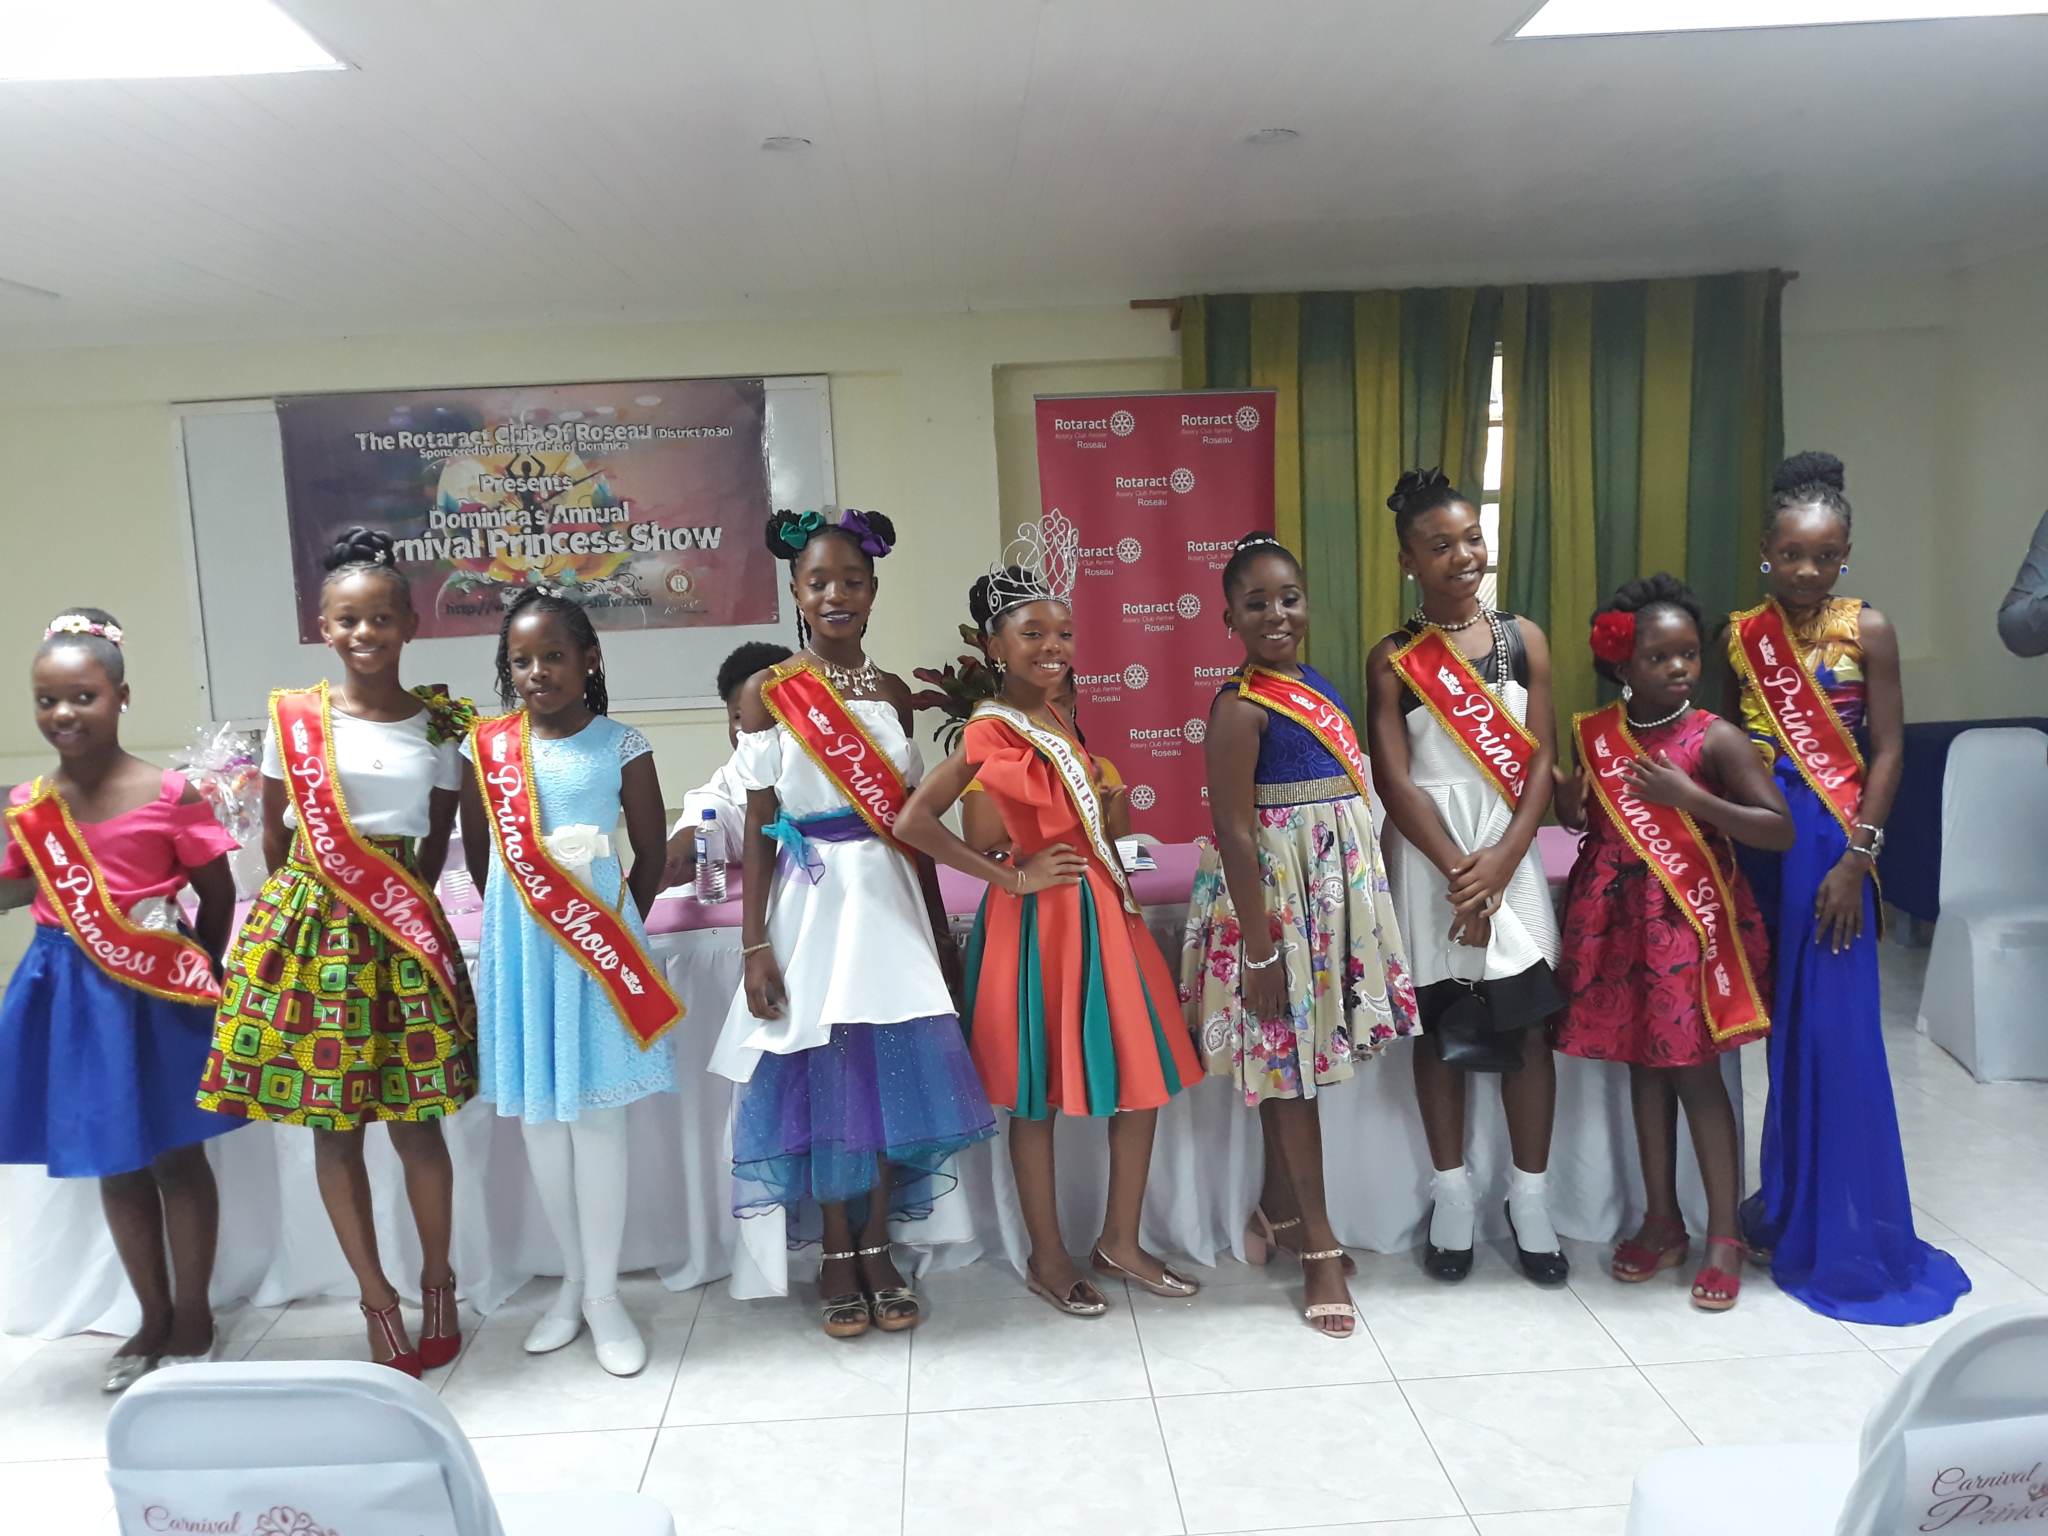 Rotaract Club of Roseau Launches Carnival Princess 2019 Show